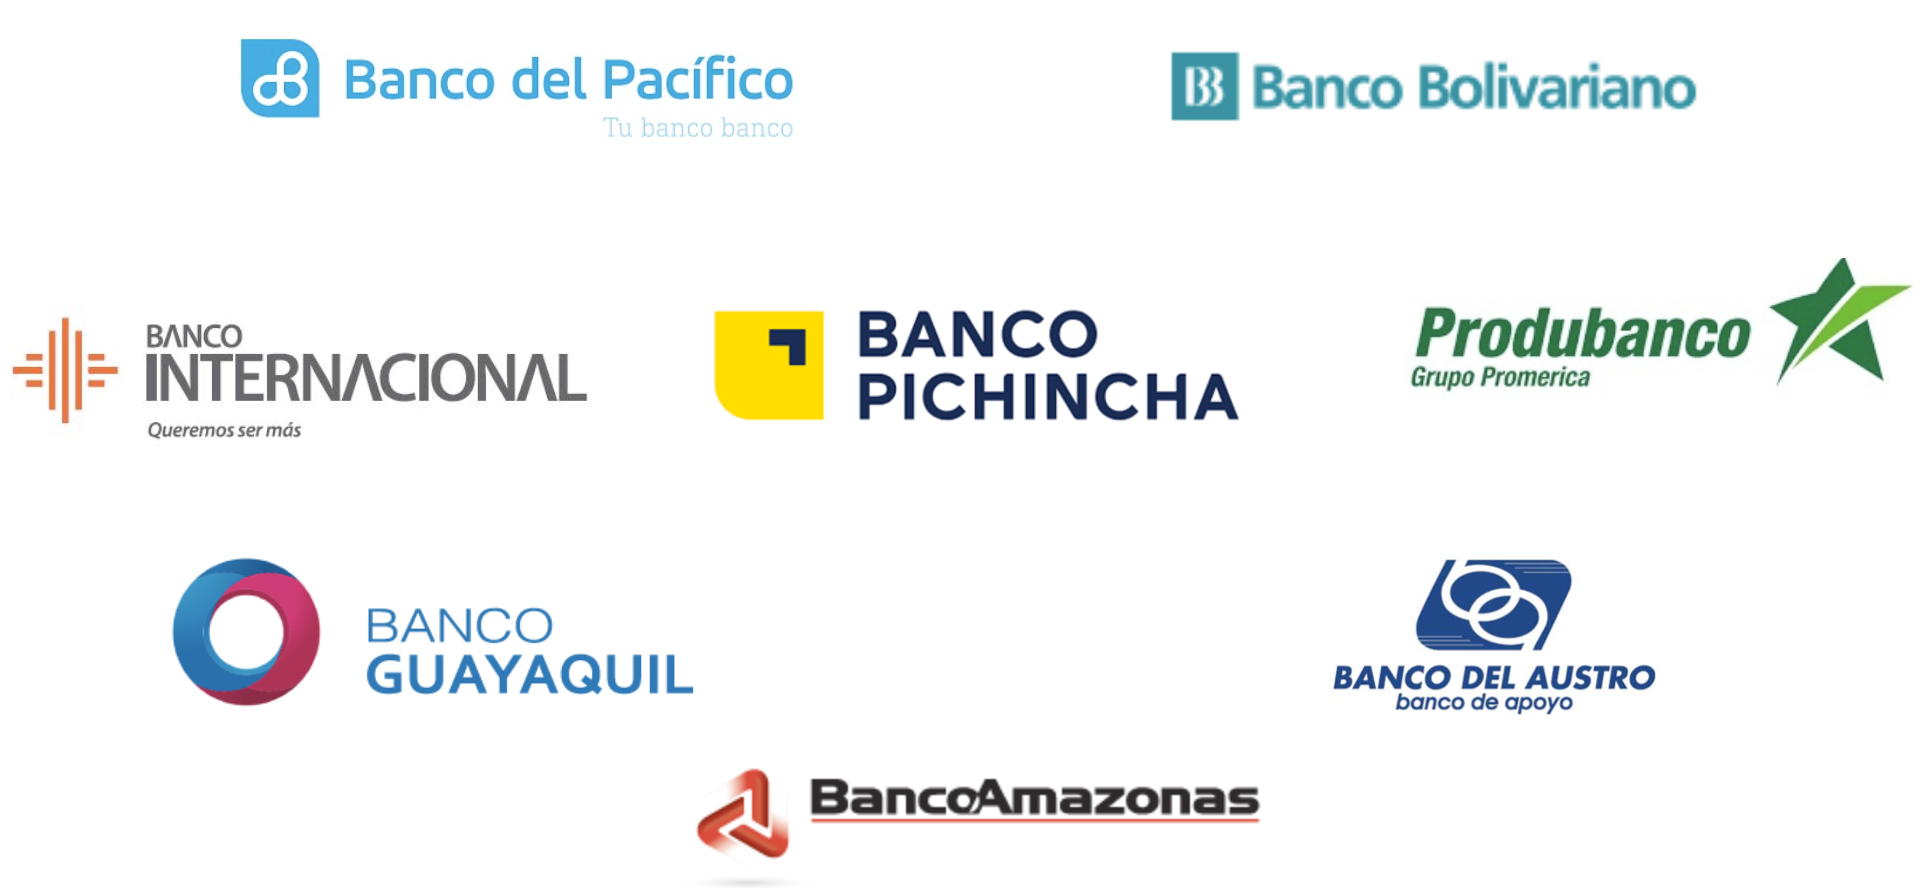 Banco Pichincha Mapa Bancos 2018